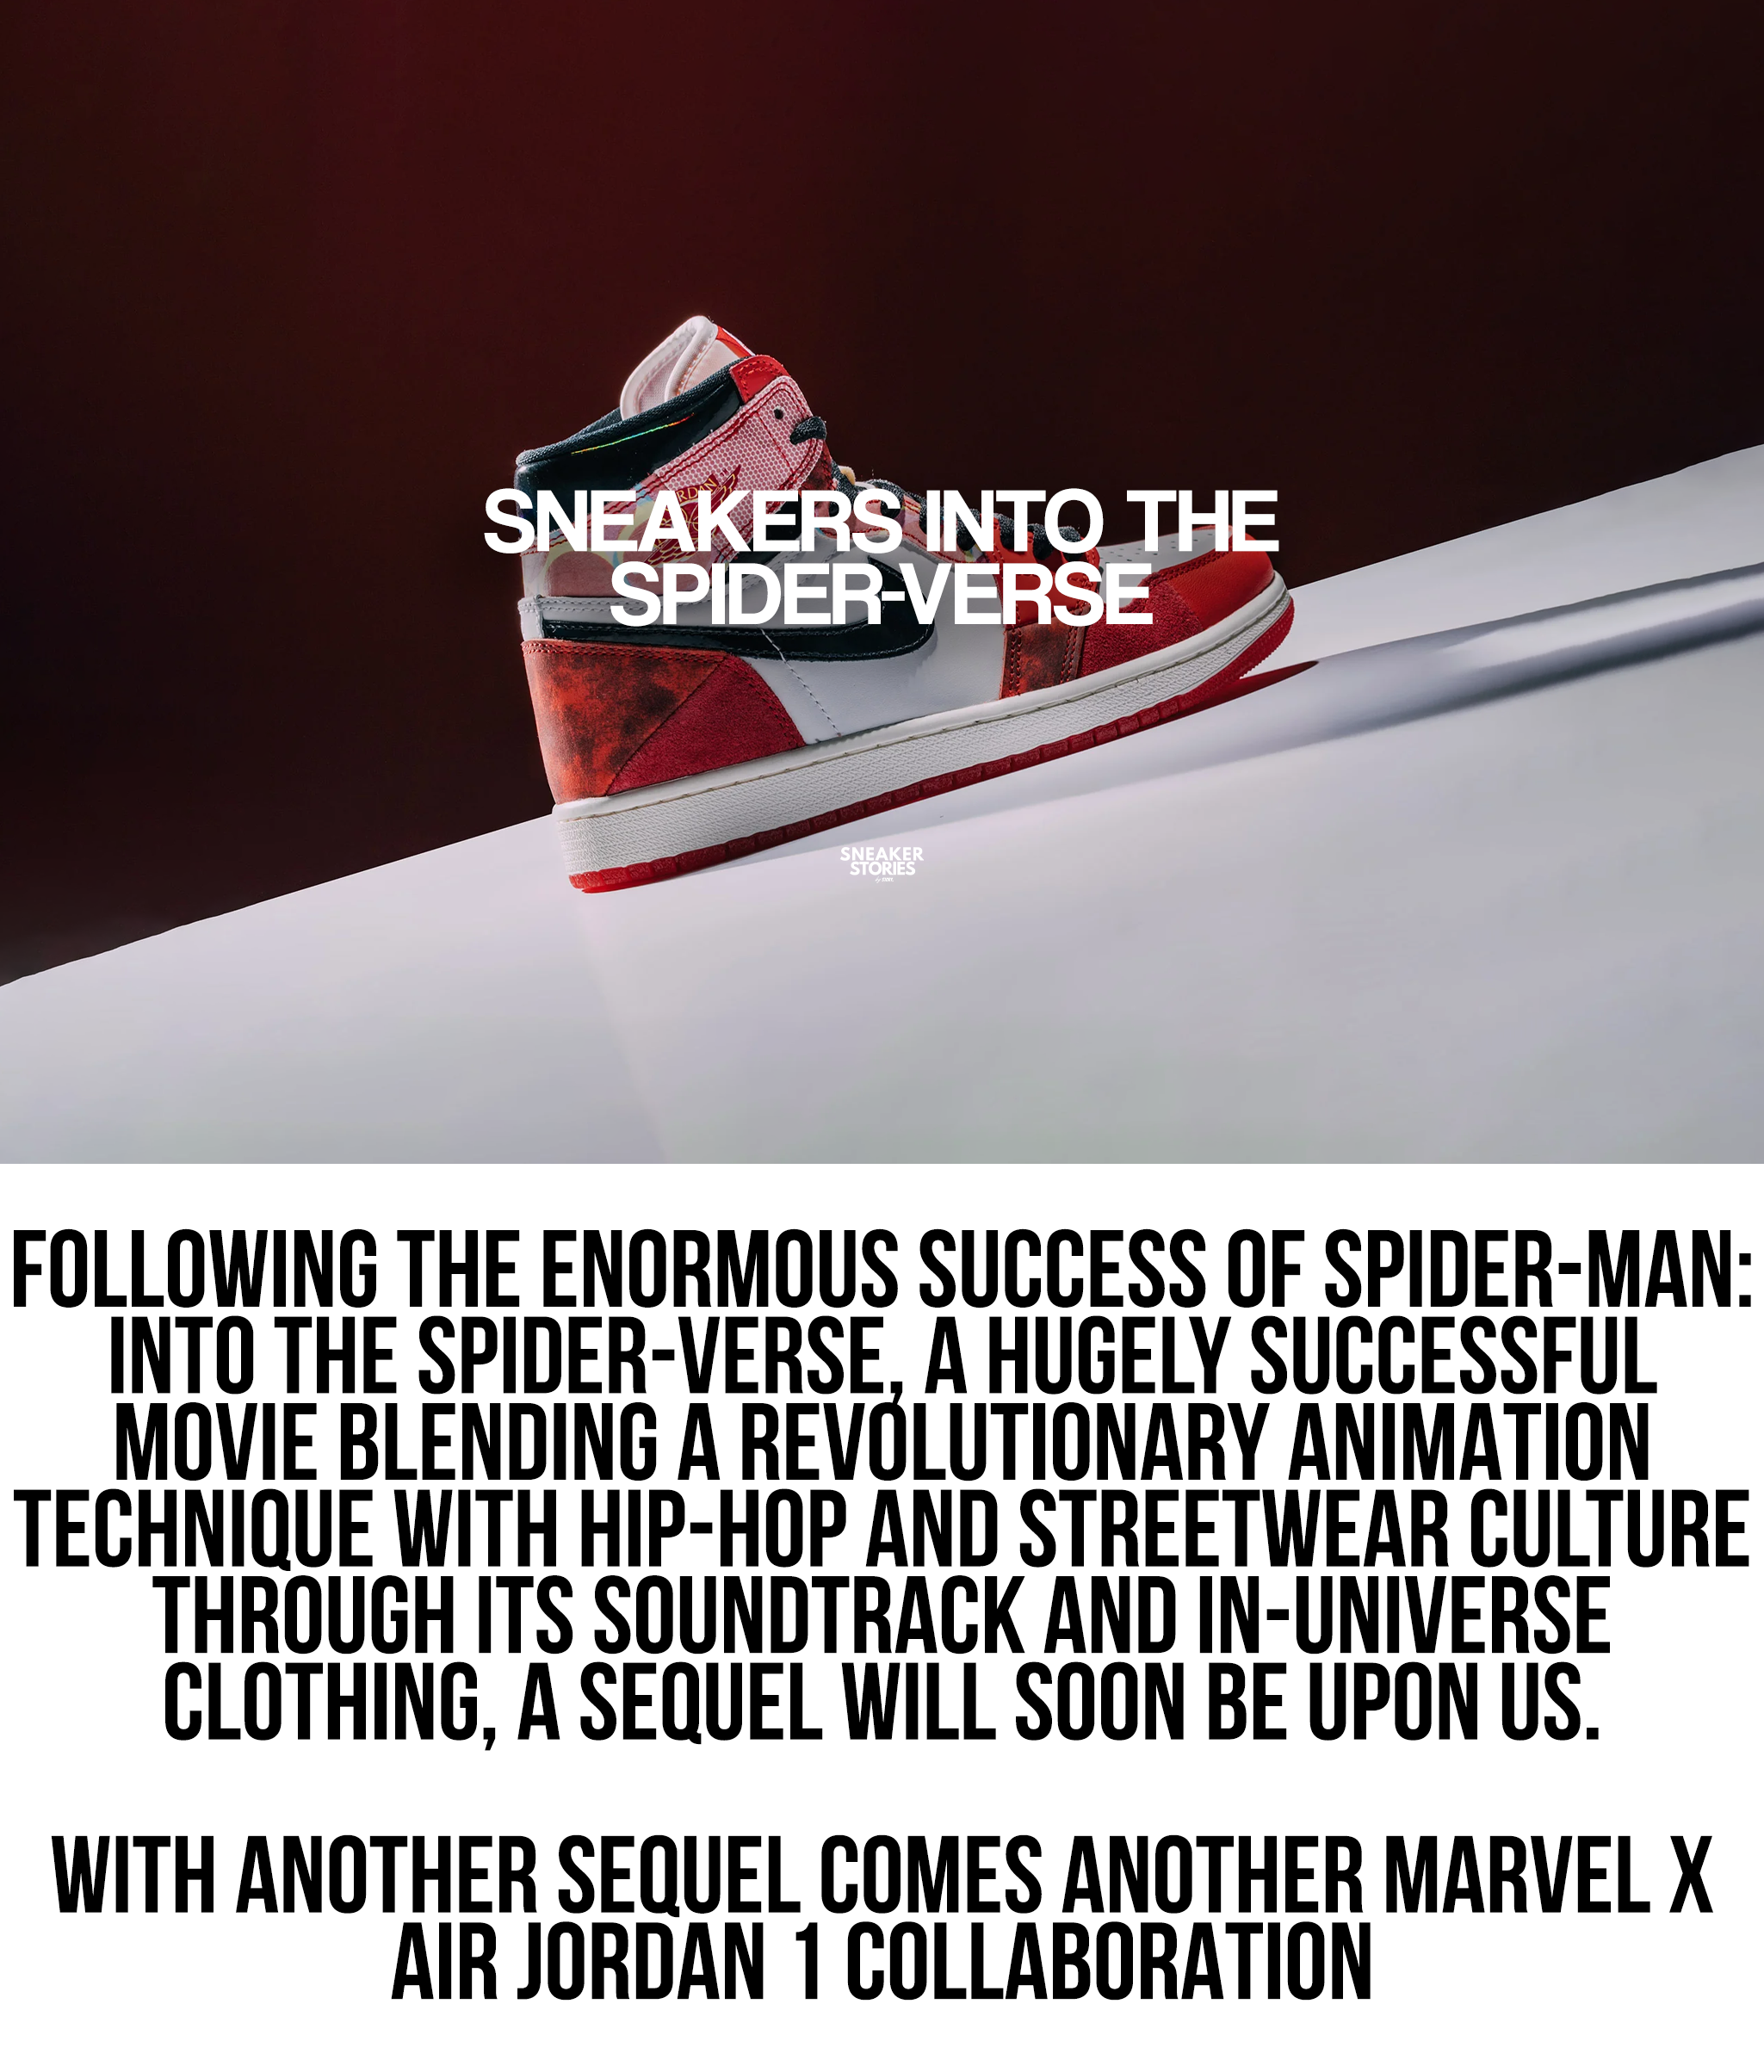 A soul story: Sneaker culture in Cape Town